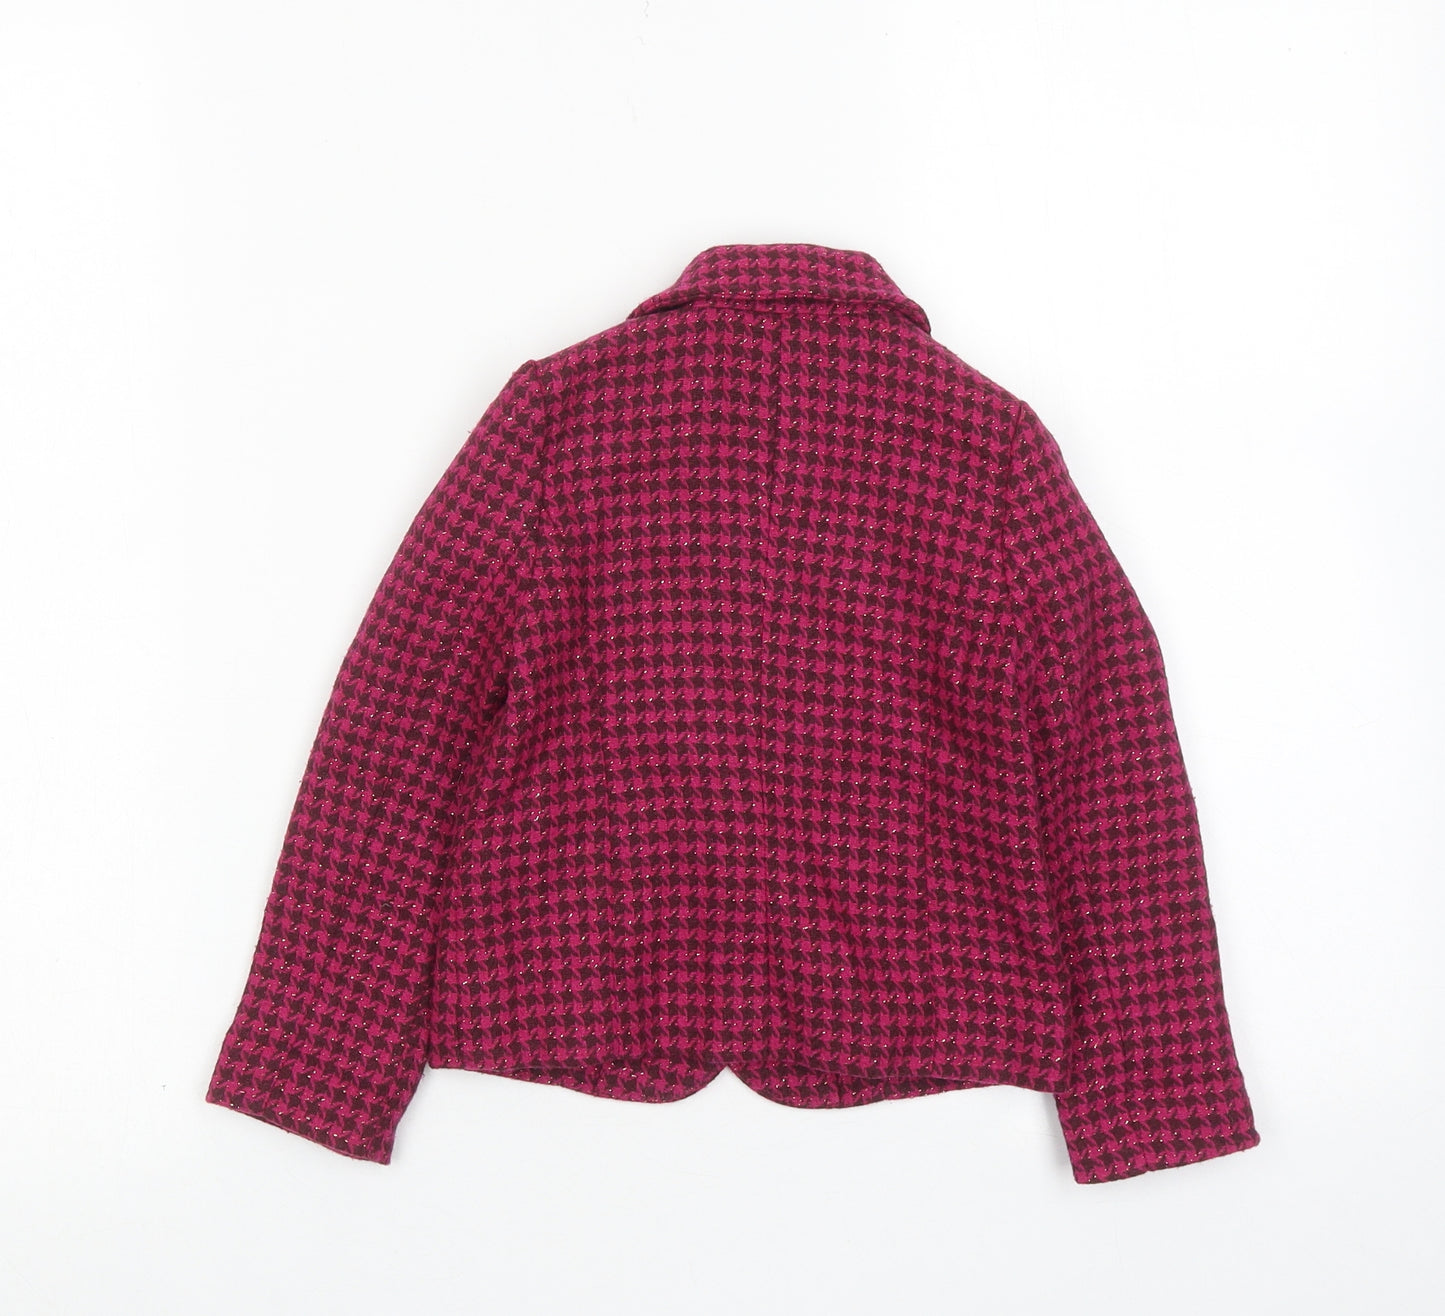 Monsoon Girls Pink Geometric Jacket Blazer Size 3-4 Years Button